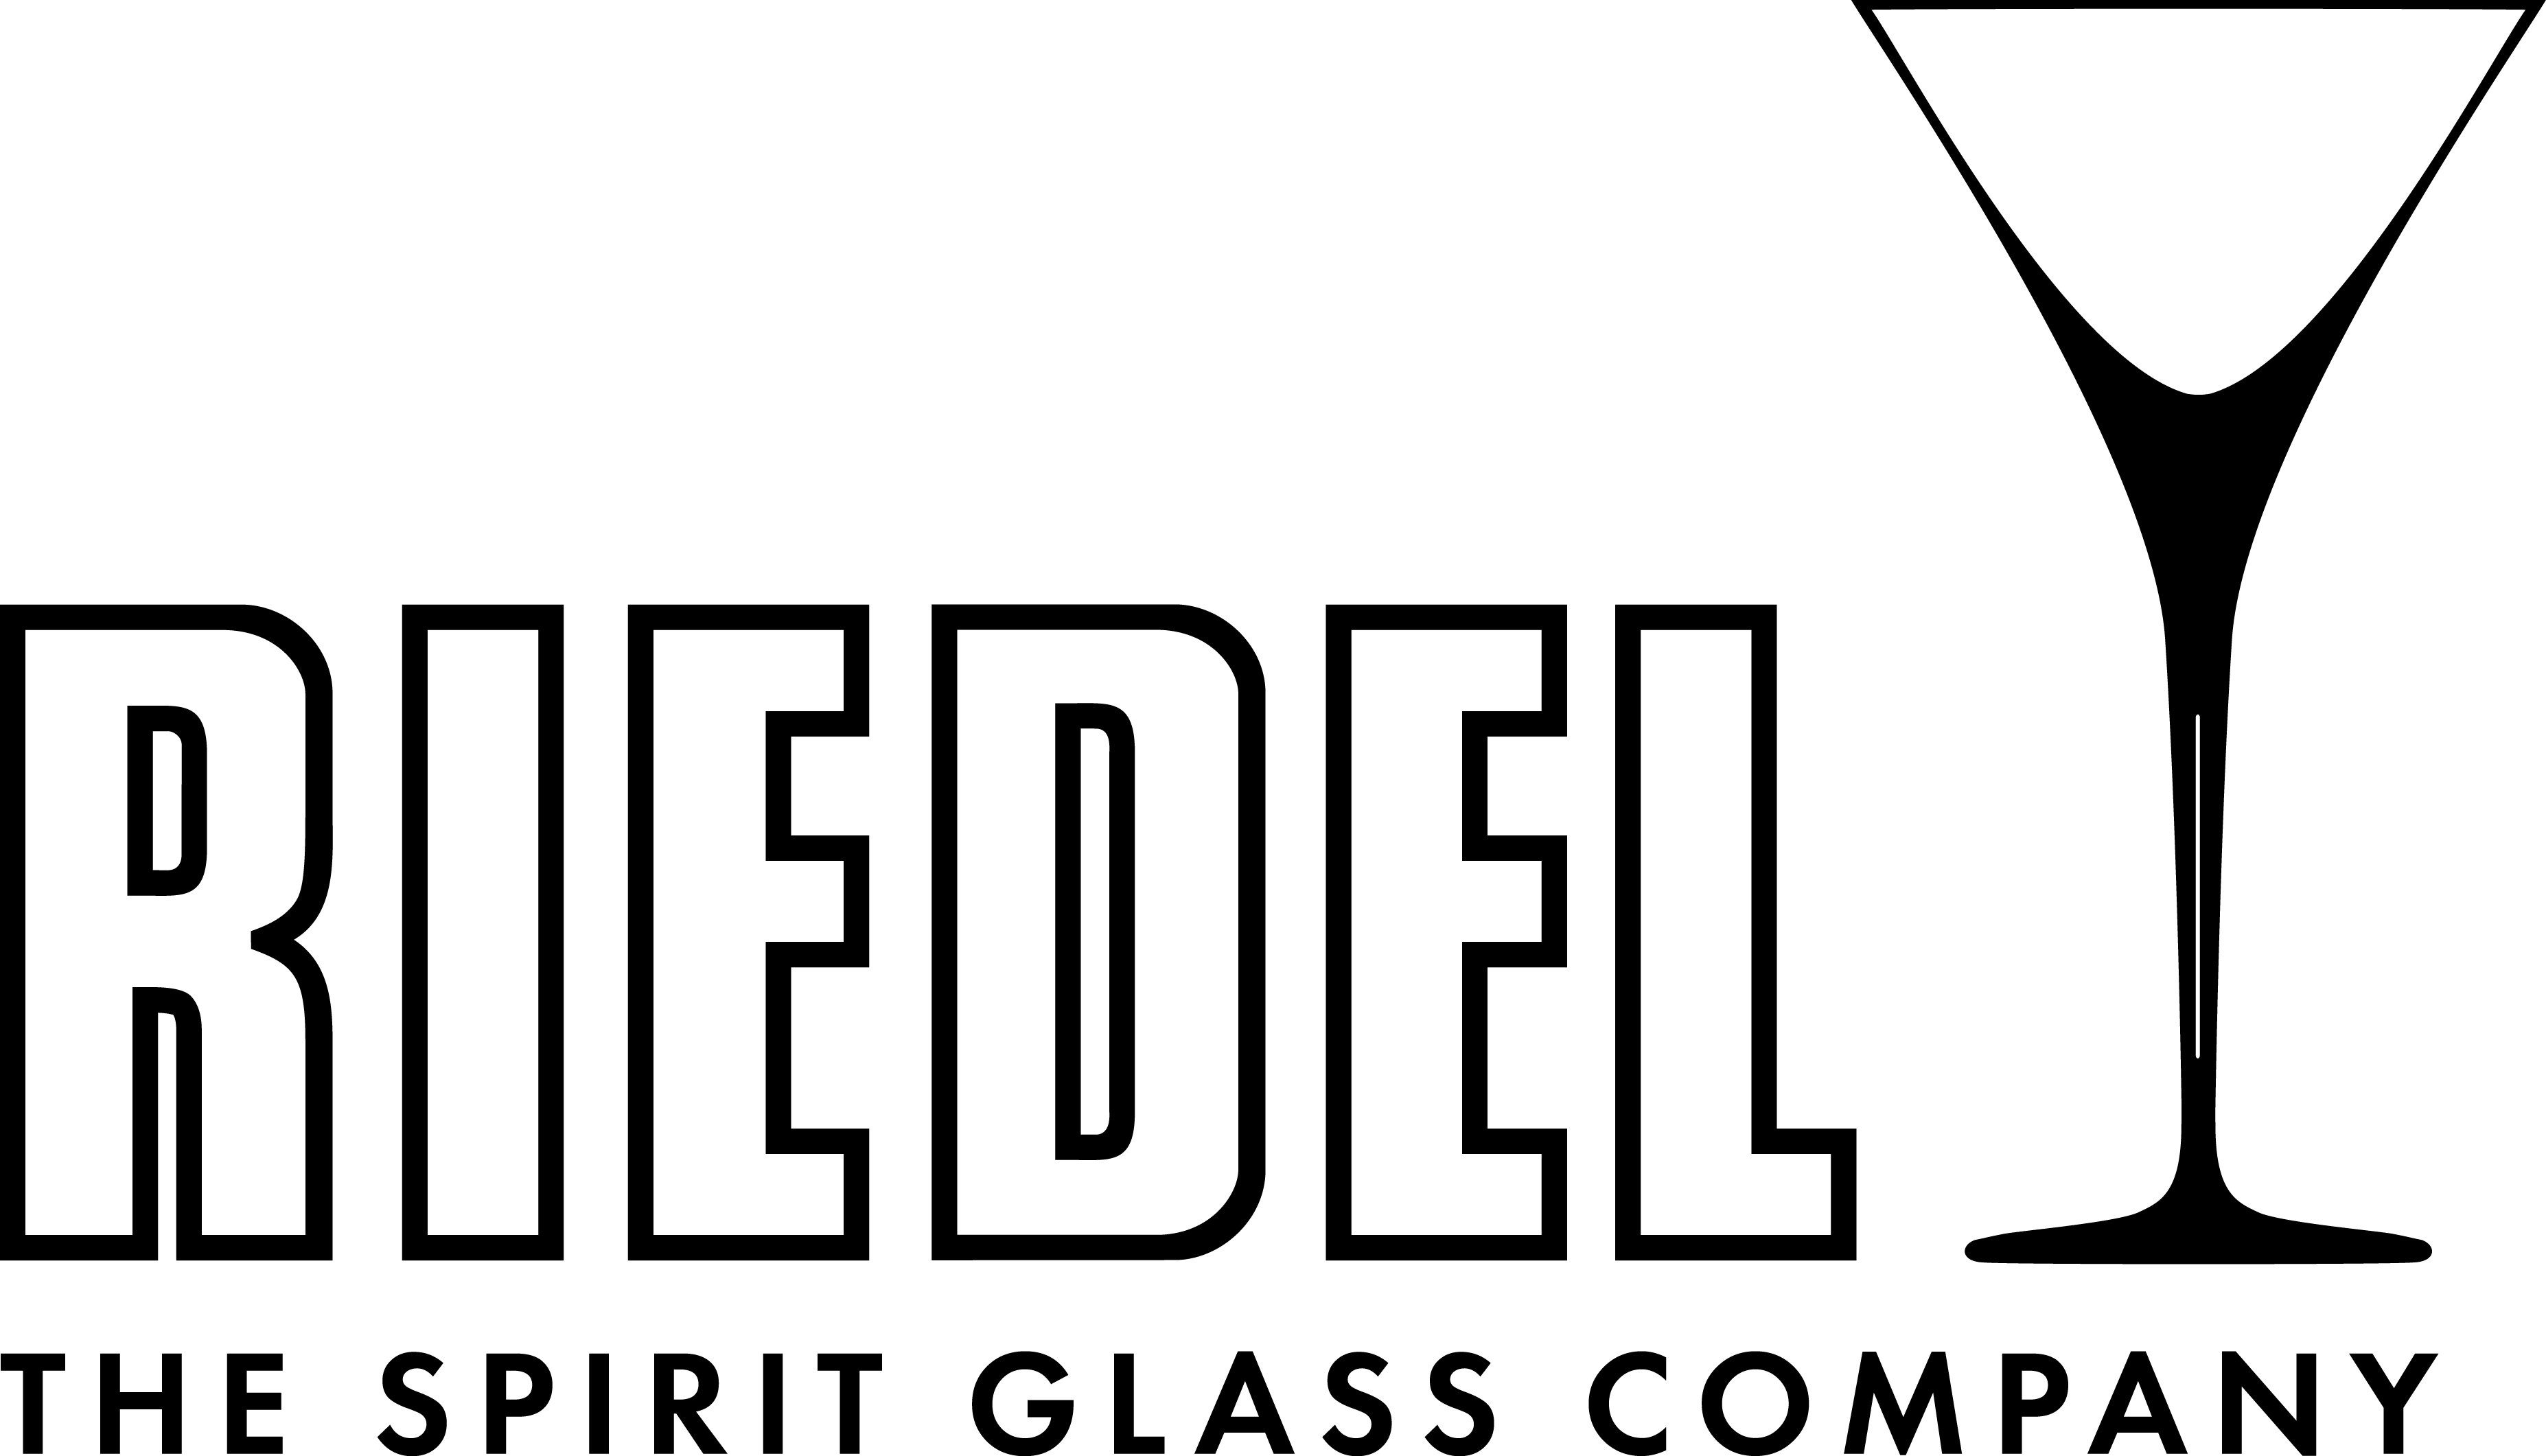 RIEDEL THE SPIRIT GLASS COMPANY